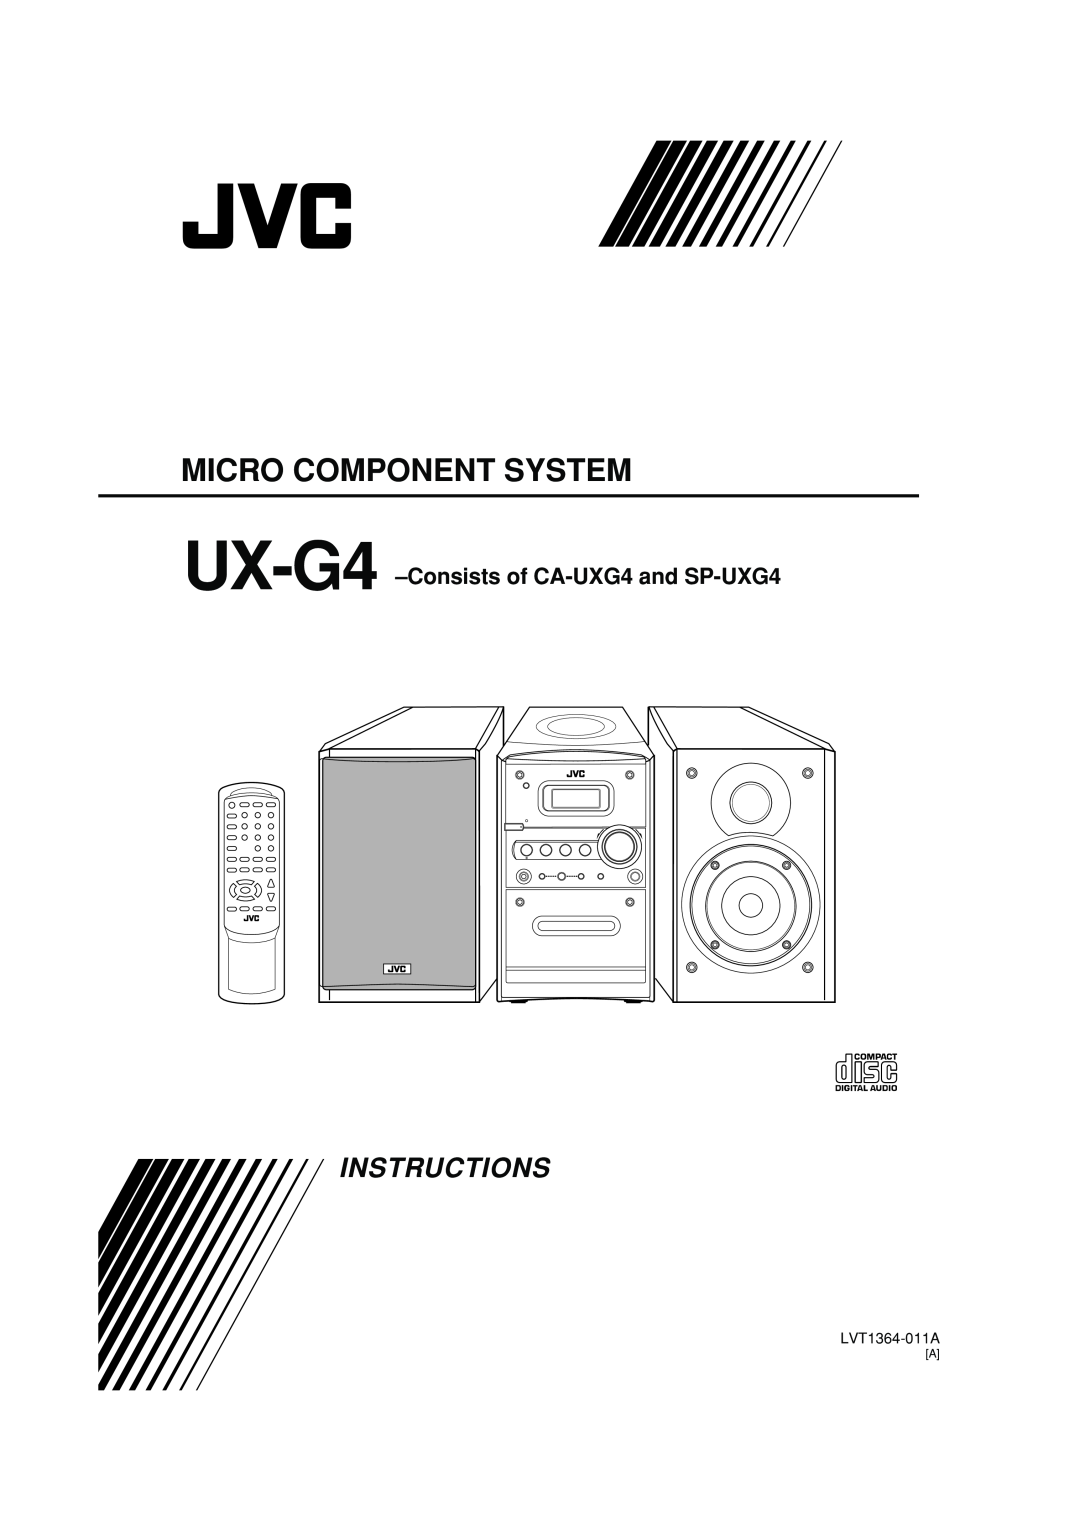 JVC LVT1364-006B manual Micro Component System, Instructions, UX-G4 –Consistsof CA-UXG4and SP-UXG4, LVT1364-011A 